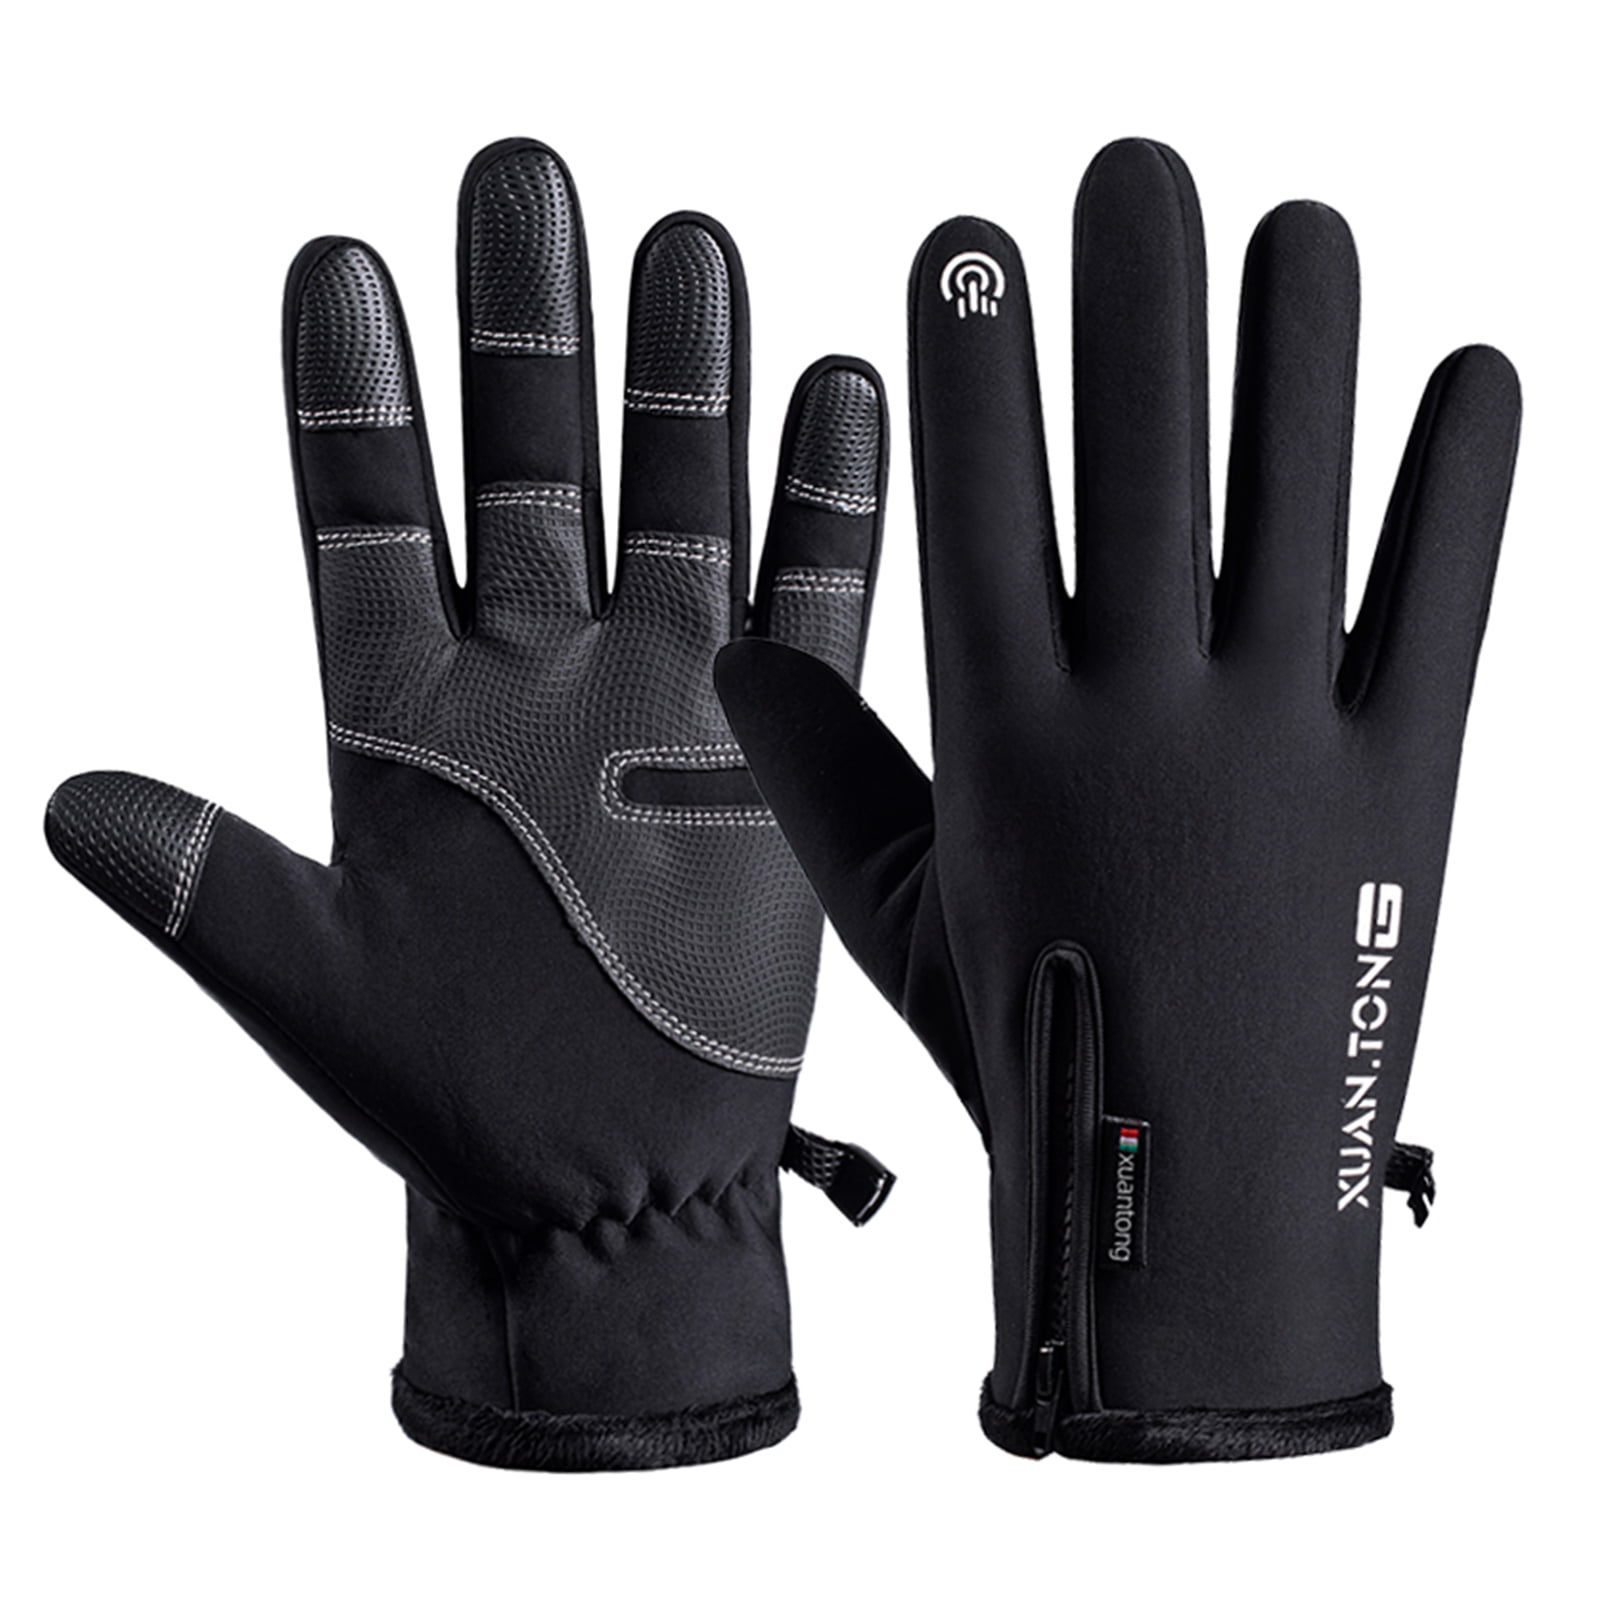 Details about   Thermal Gloves Touch Screen Winter Warm Men Women Waterproof Non-Slip Soft Work 